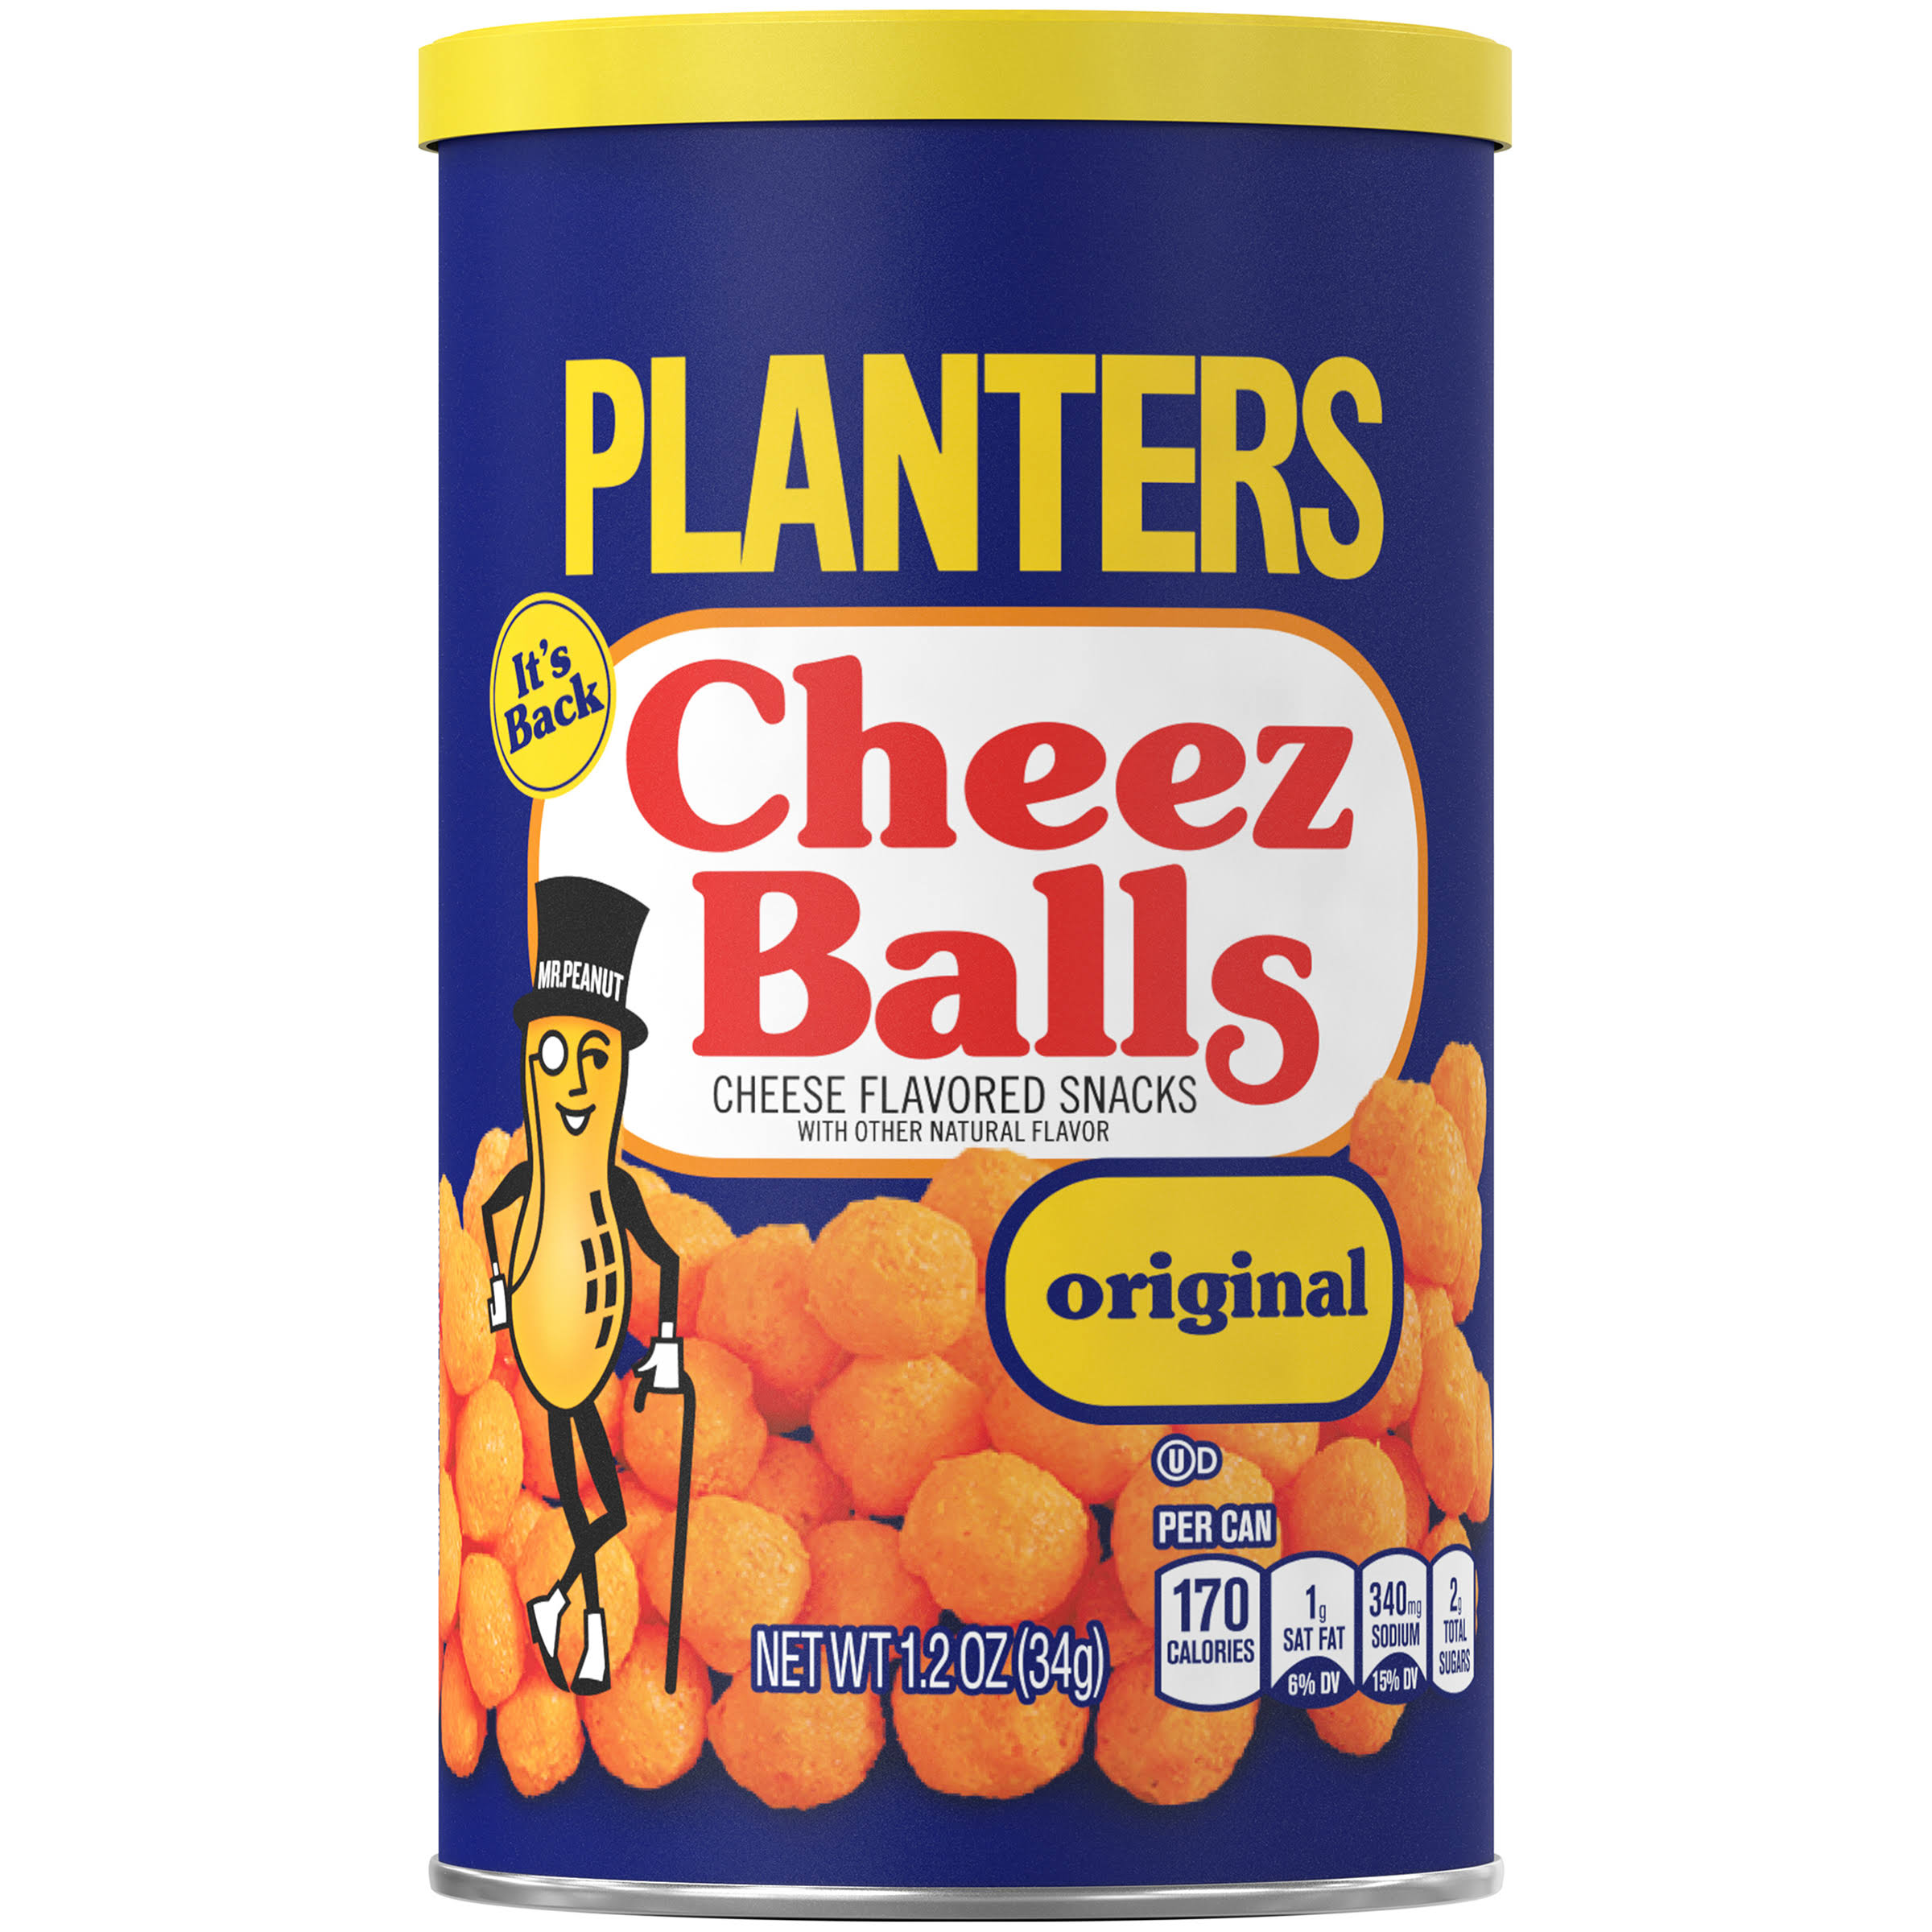 Planters Cheez Balls, Original - 1.2 oz